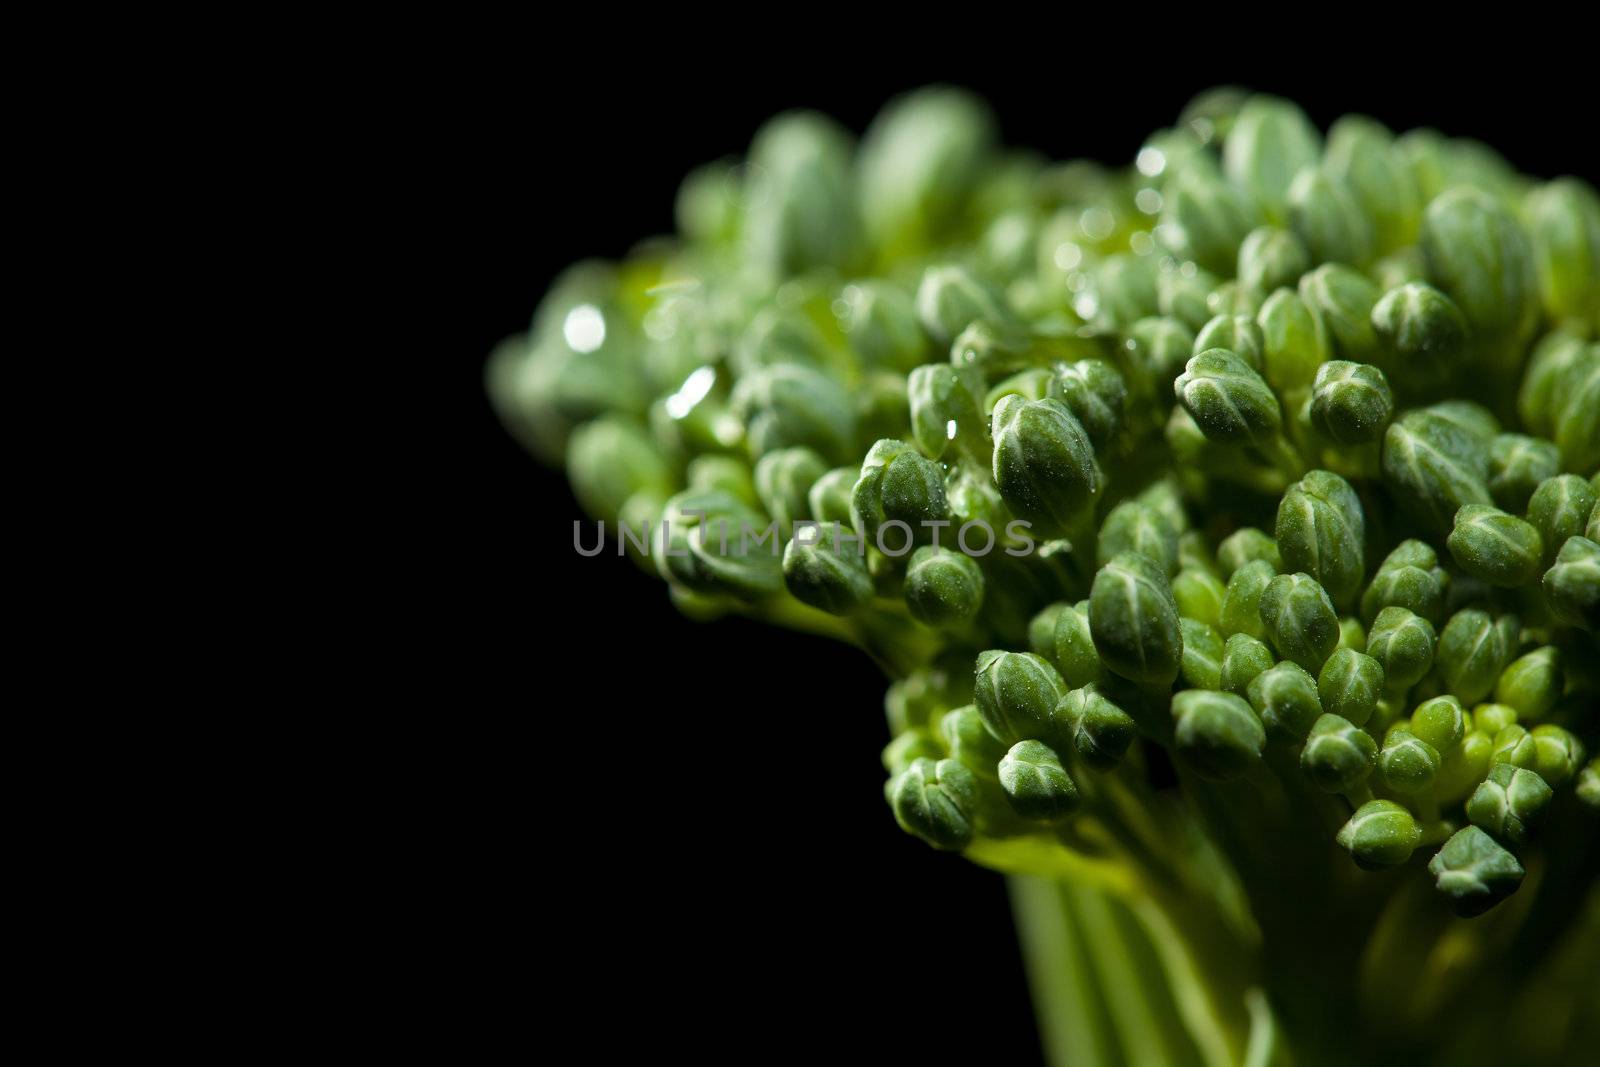 A small form of broccoli, called bimi on dark background